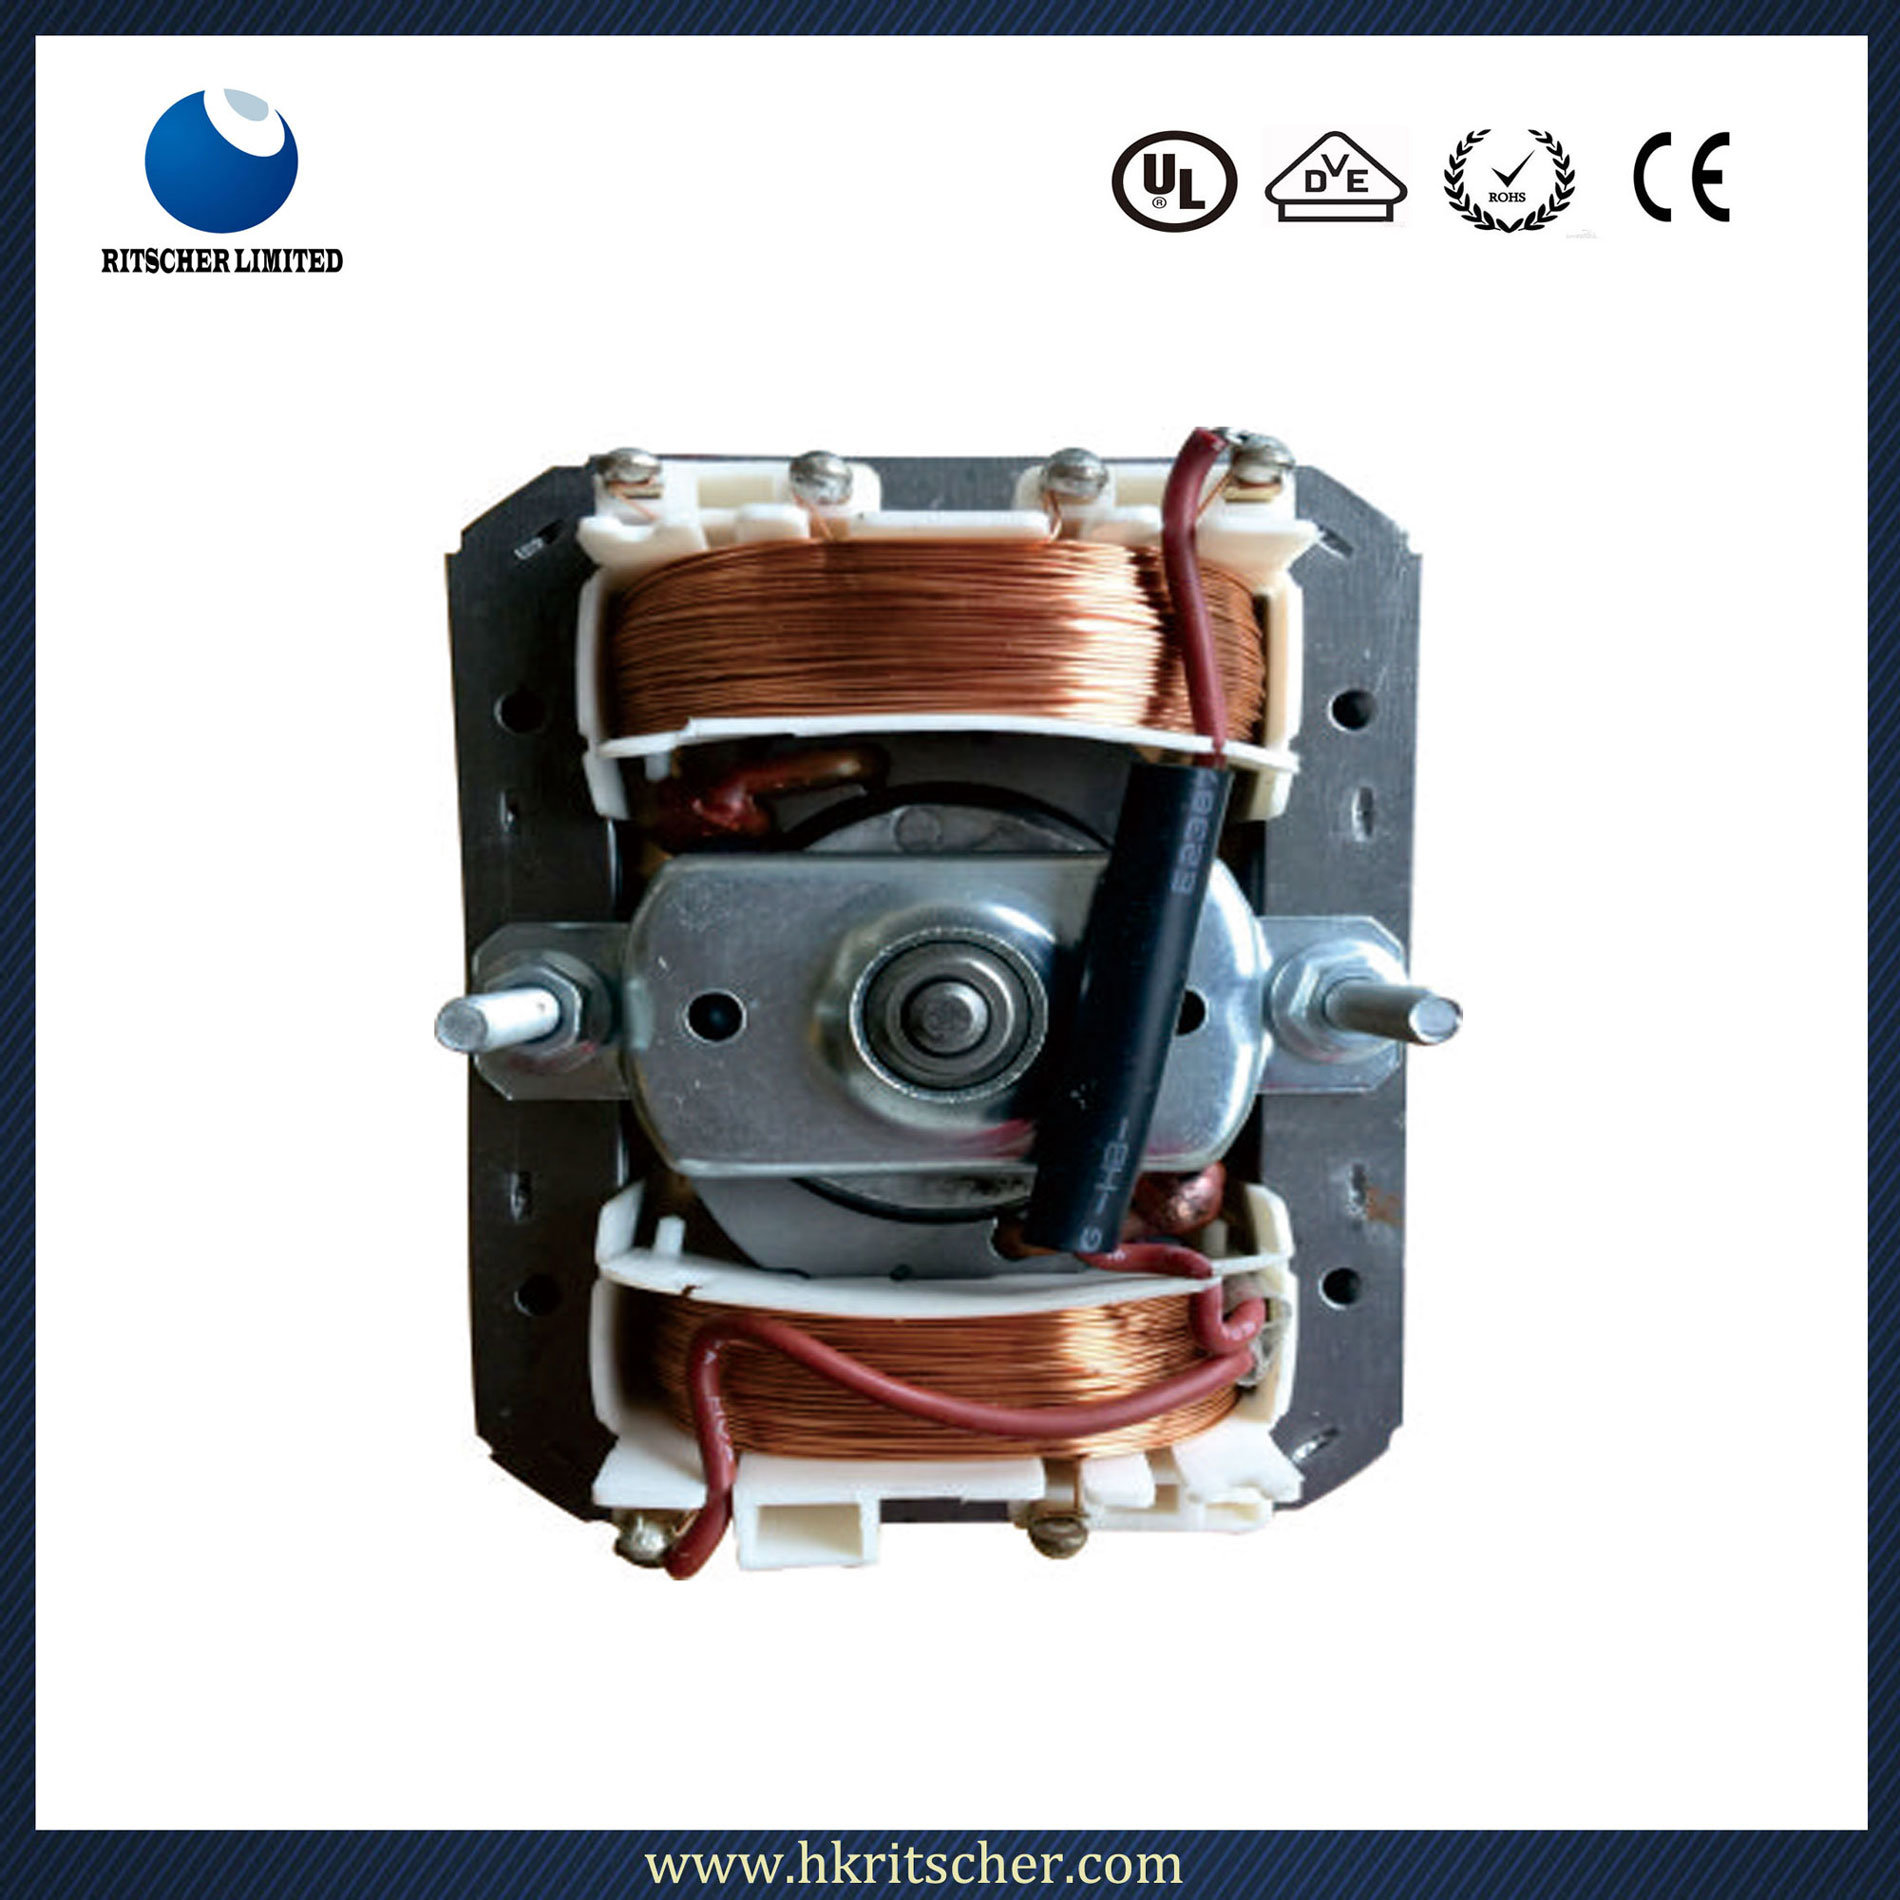 Home Appliance Motor Factory Wholesale Motor